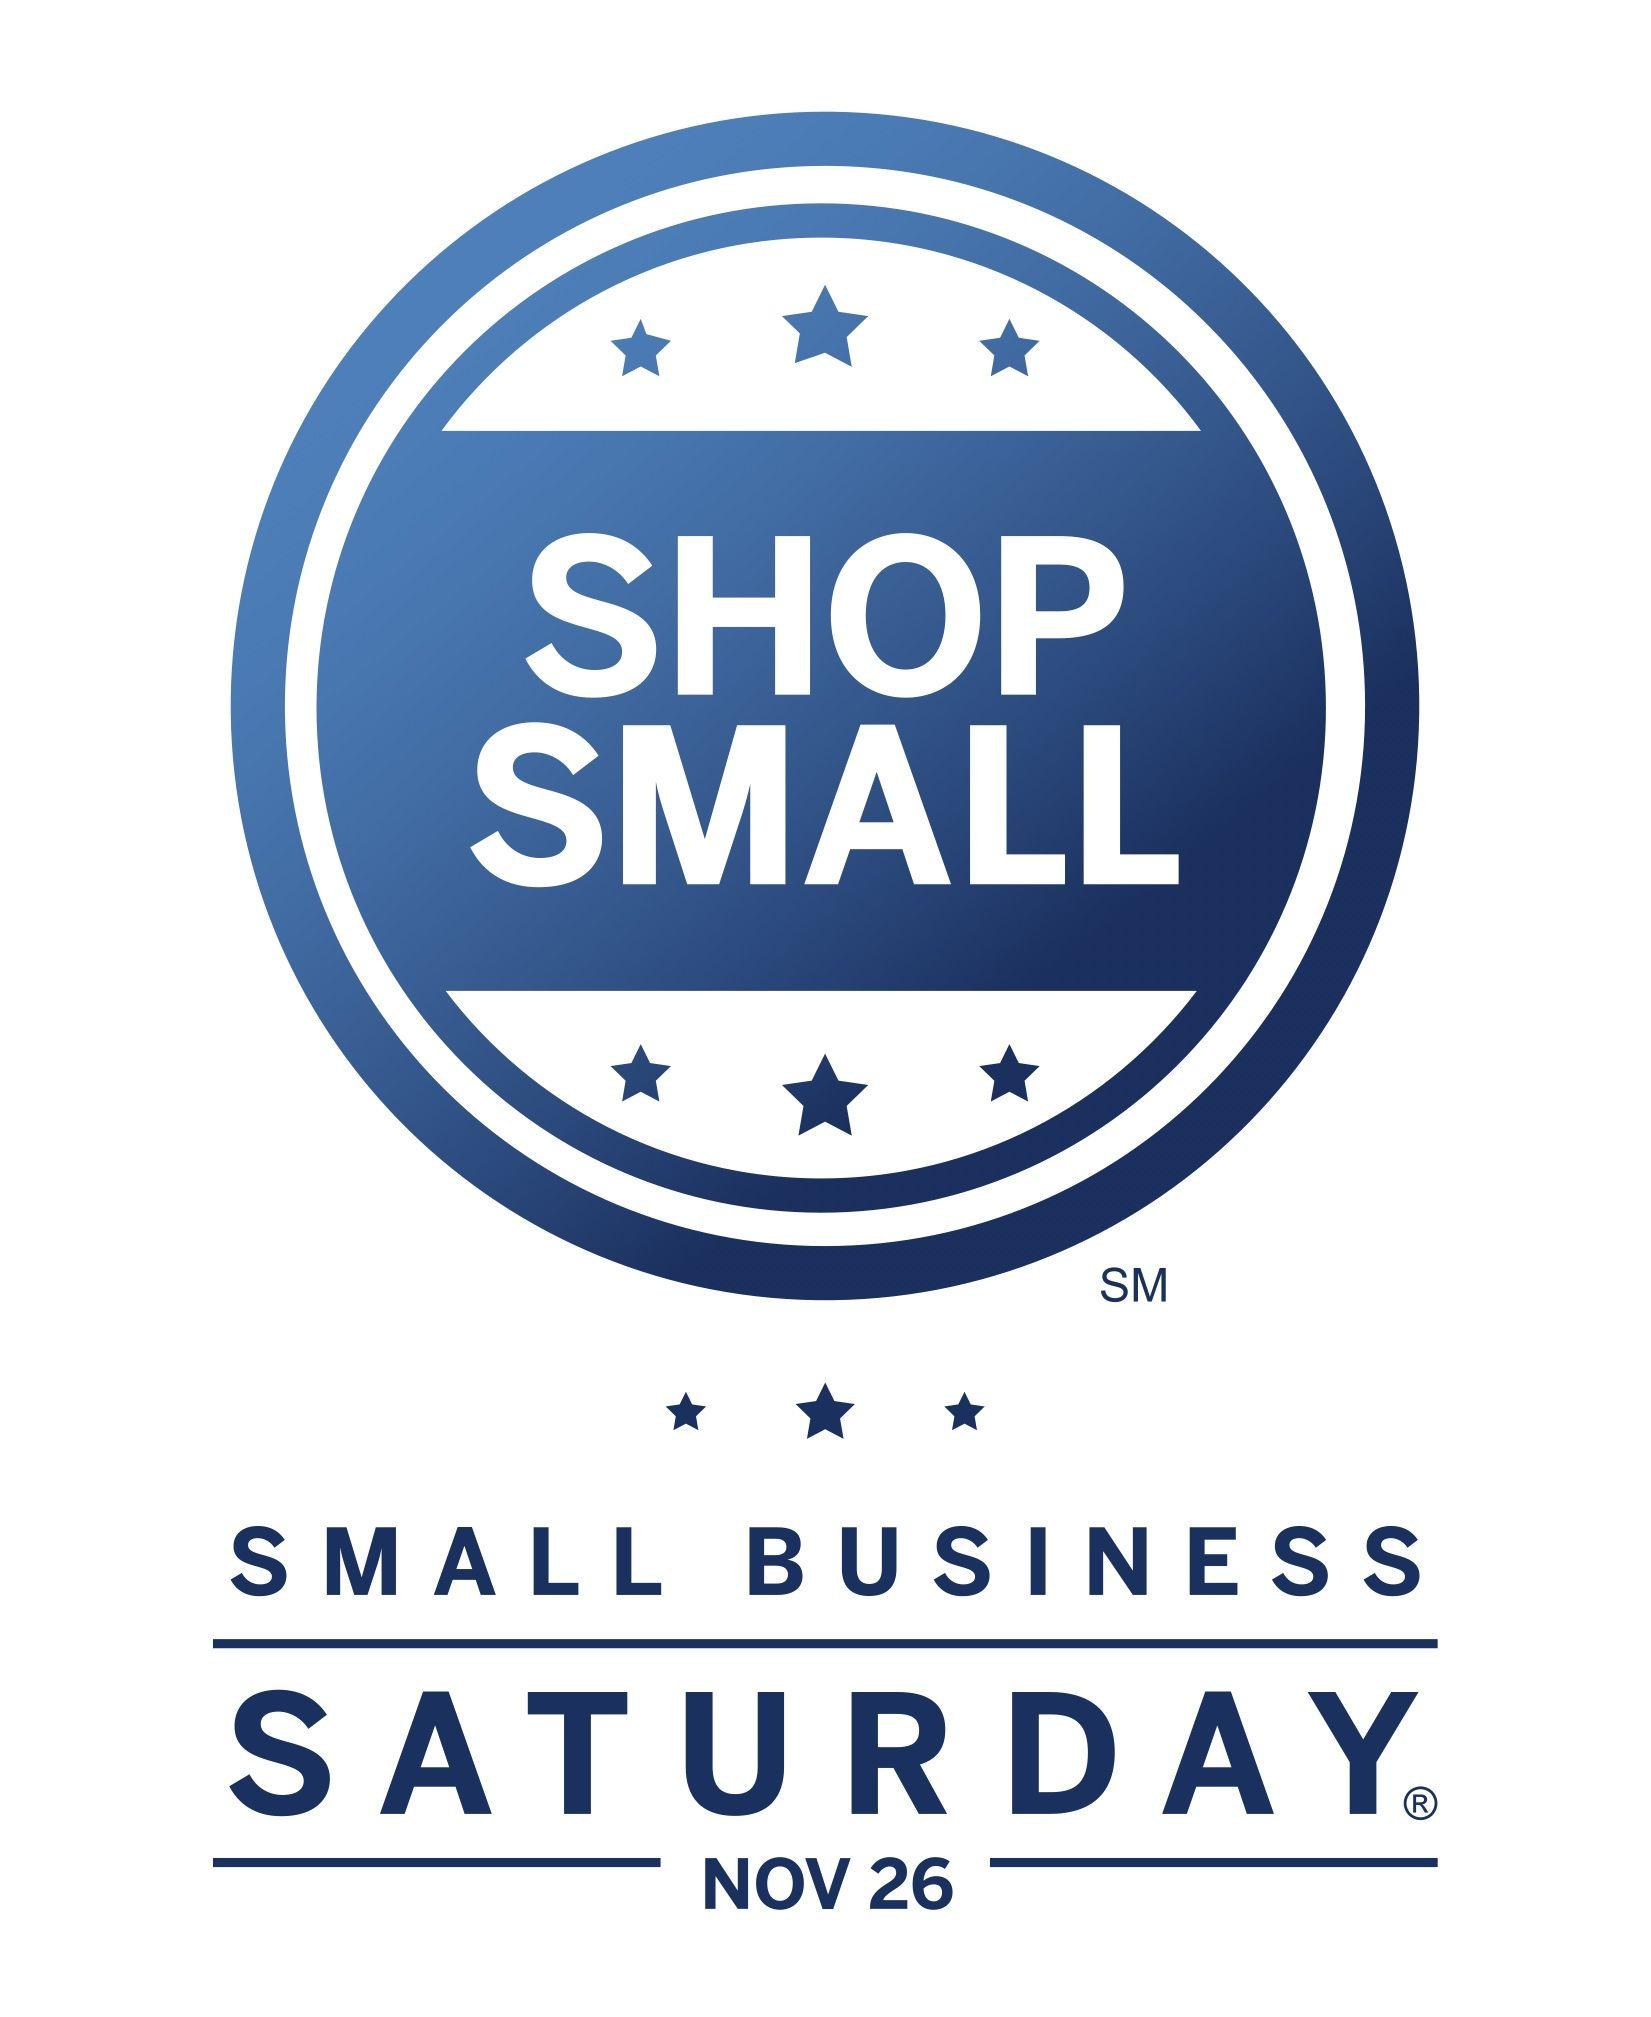 Yola Logo - Yola pledges to support Small Business Saturday® | Yola